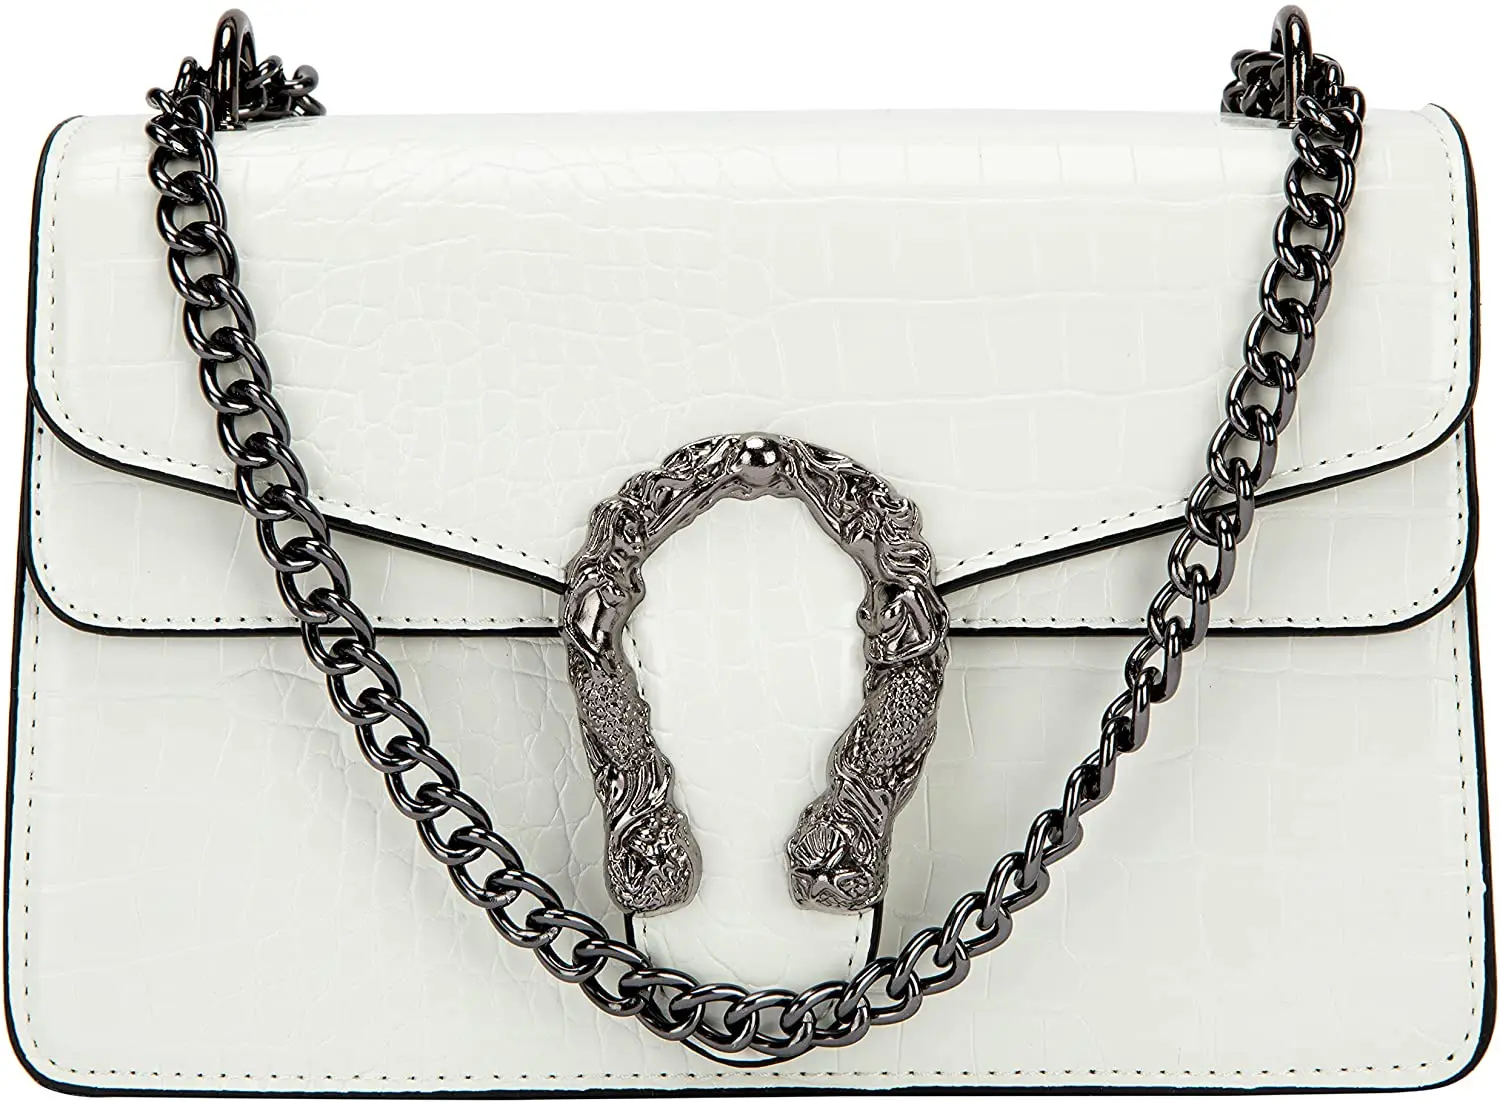 

Trendy Chain Strap Crossbody Bag For Women Luxurious Snakeskin-Print Leather Shoulder Pursel Ladies Evening Handbag Satchel